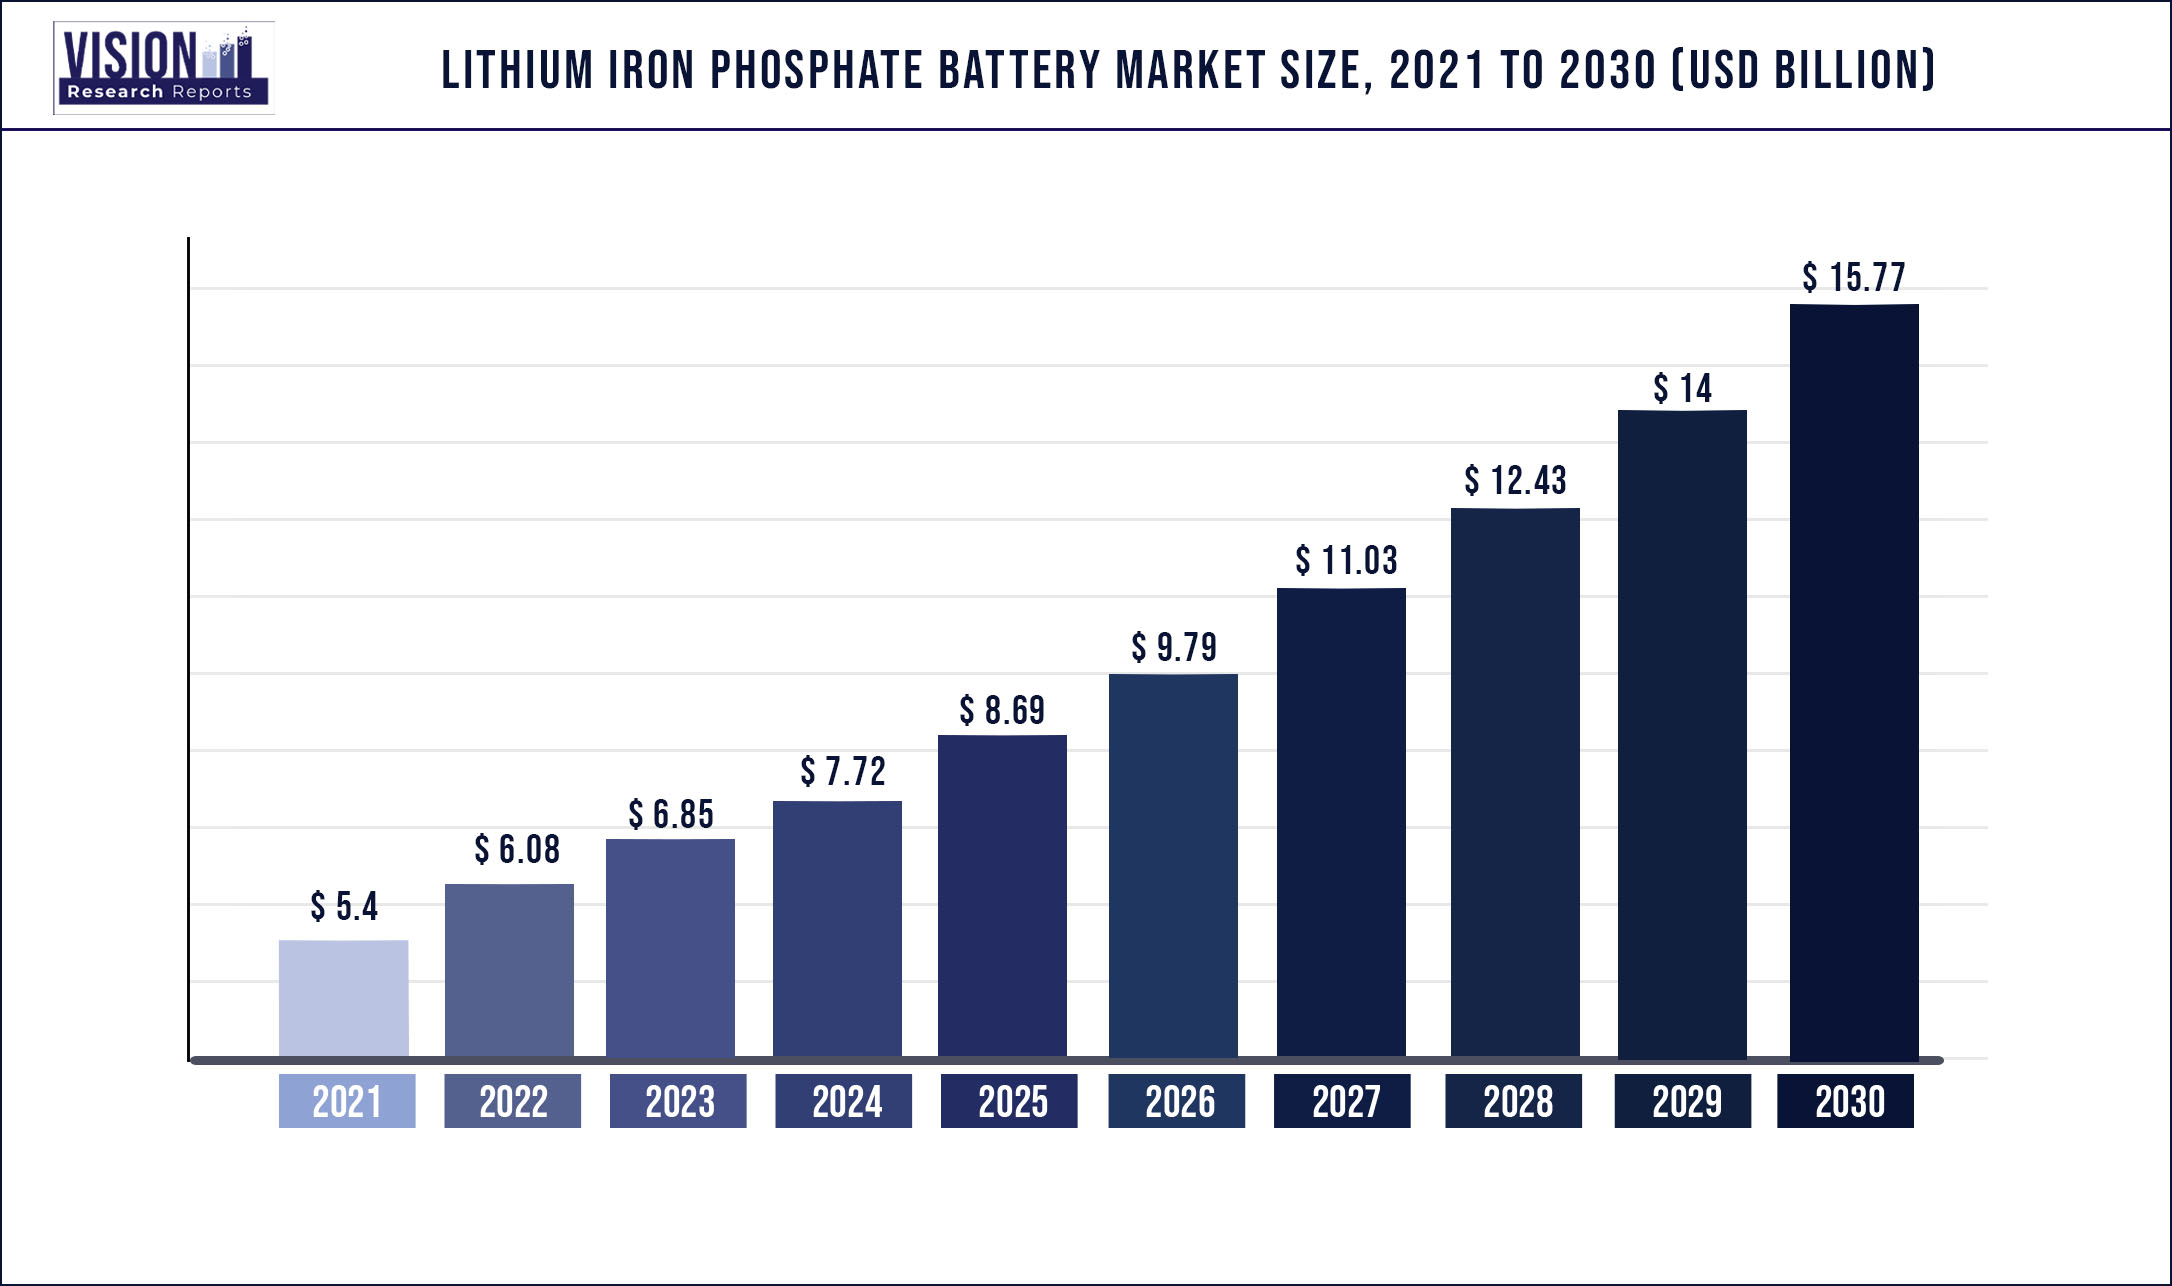 Lithium Iron Phosphate Battery Market Size 2021 to 2030